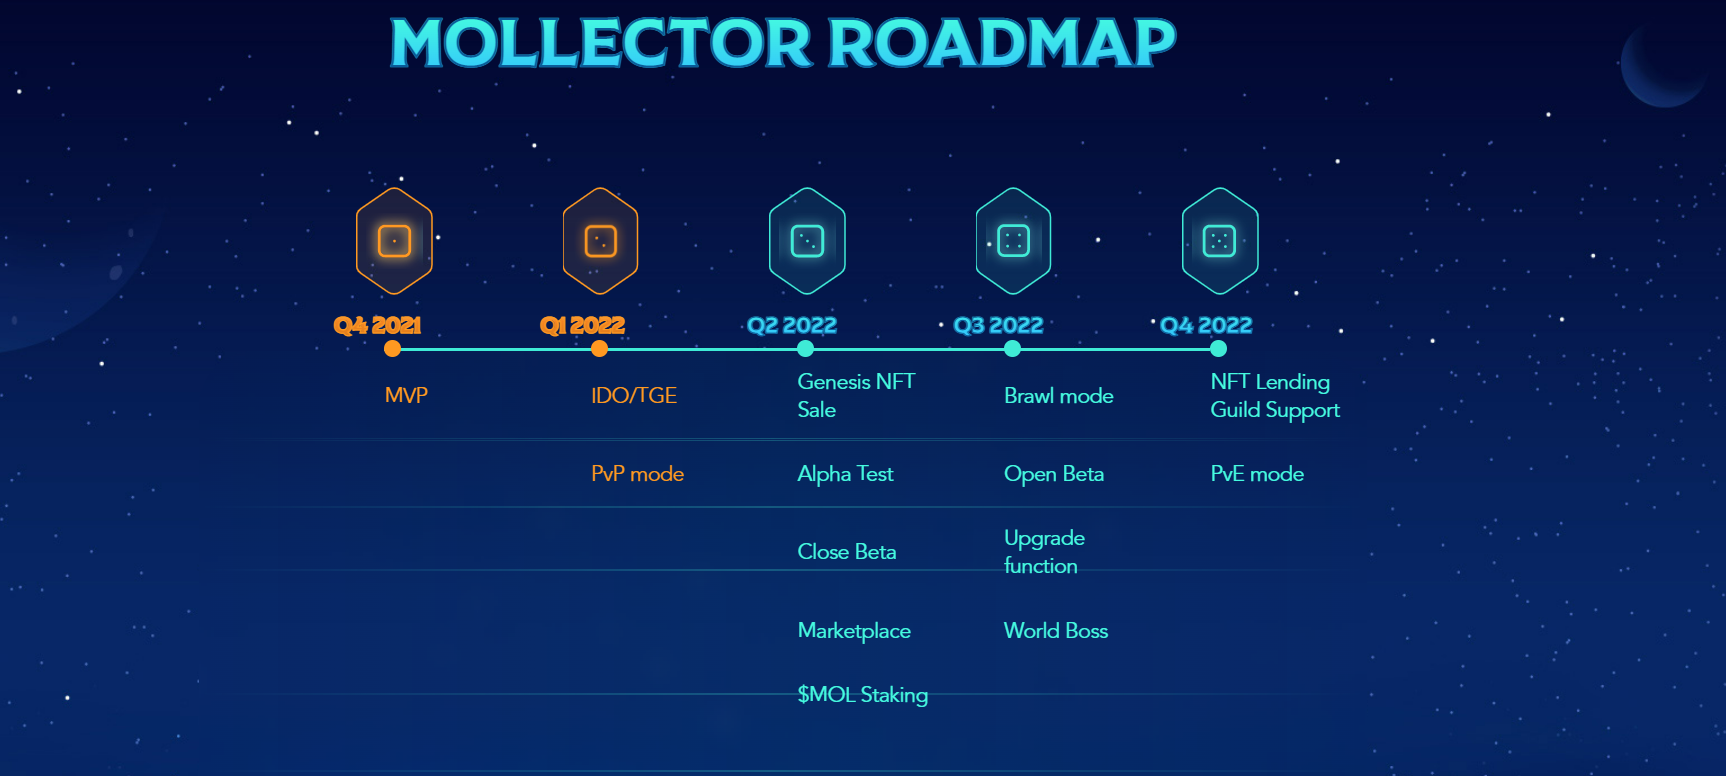 Mollector roadmap